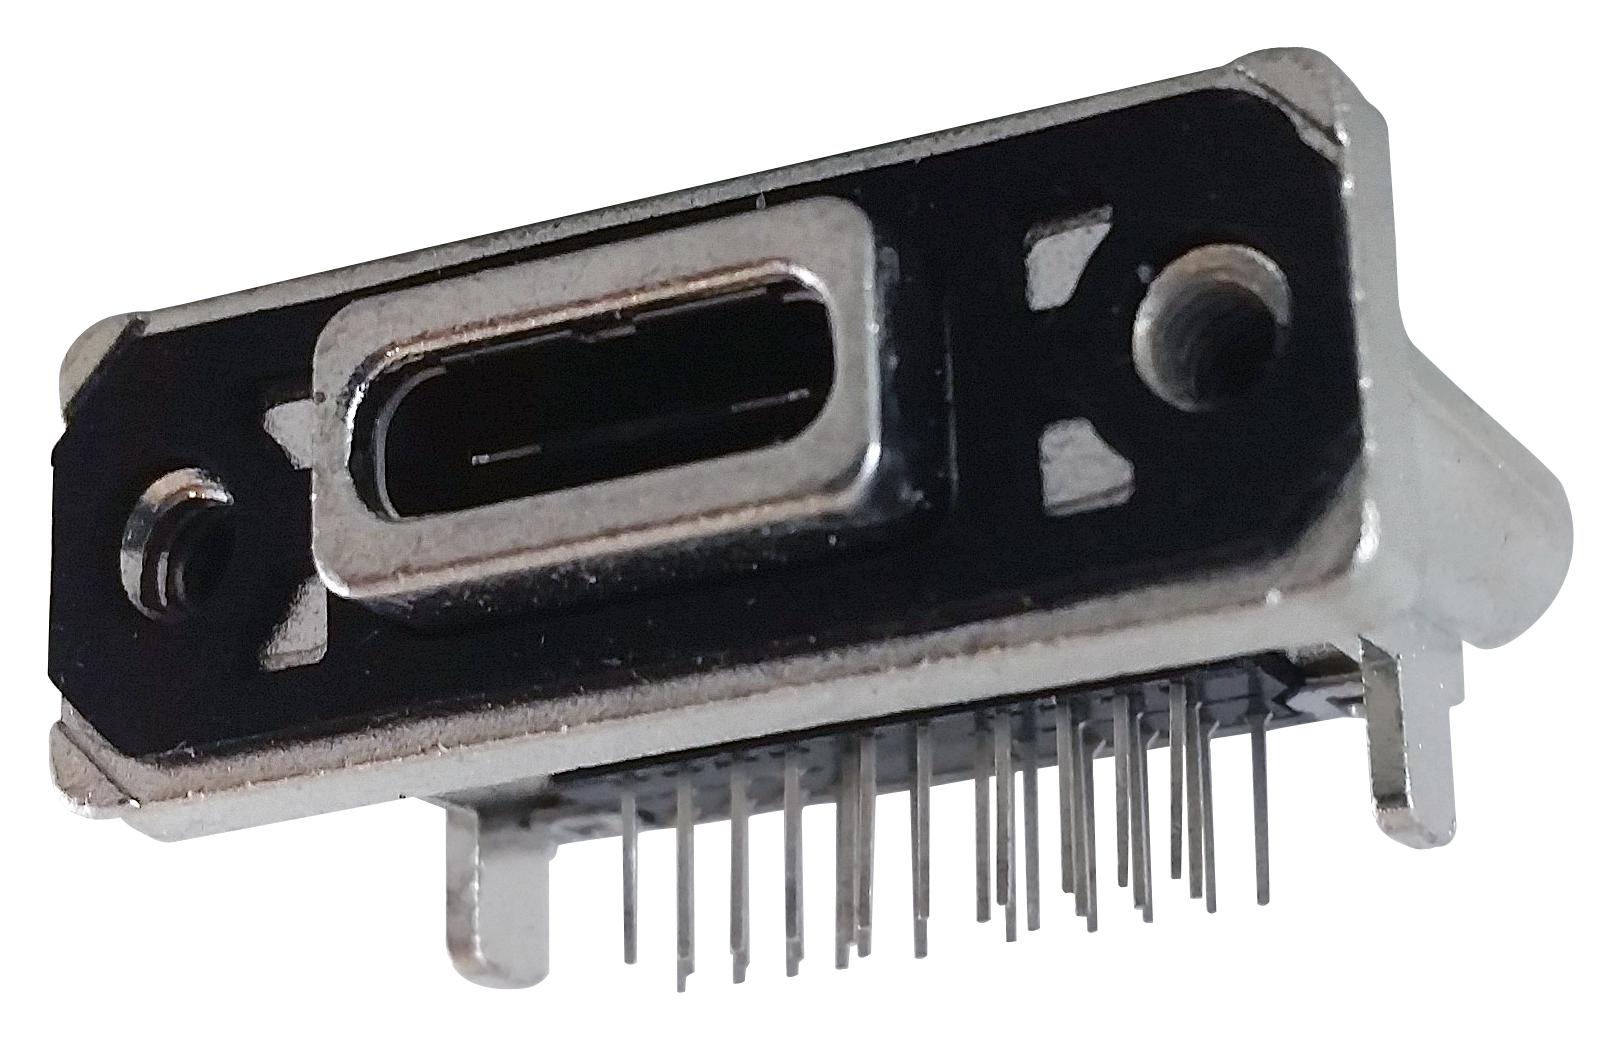 MUSBR-M1C1-30 RUGGED USB, 3.1 TYPE C, RECEPTACLE, IP67 AMPHENOL ICC